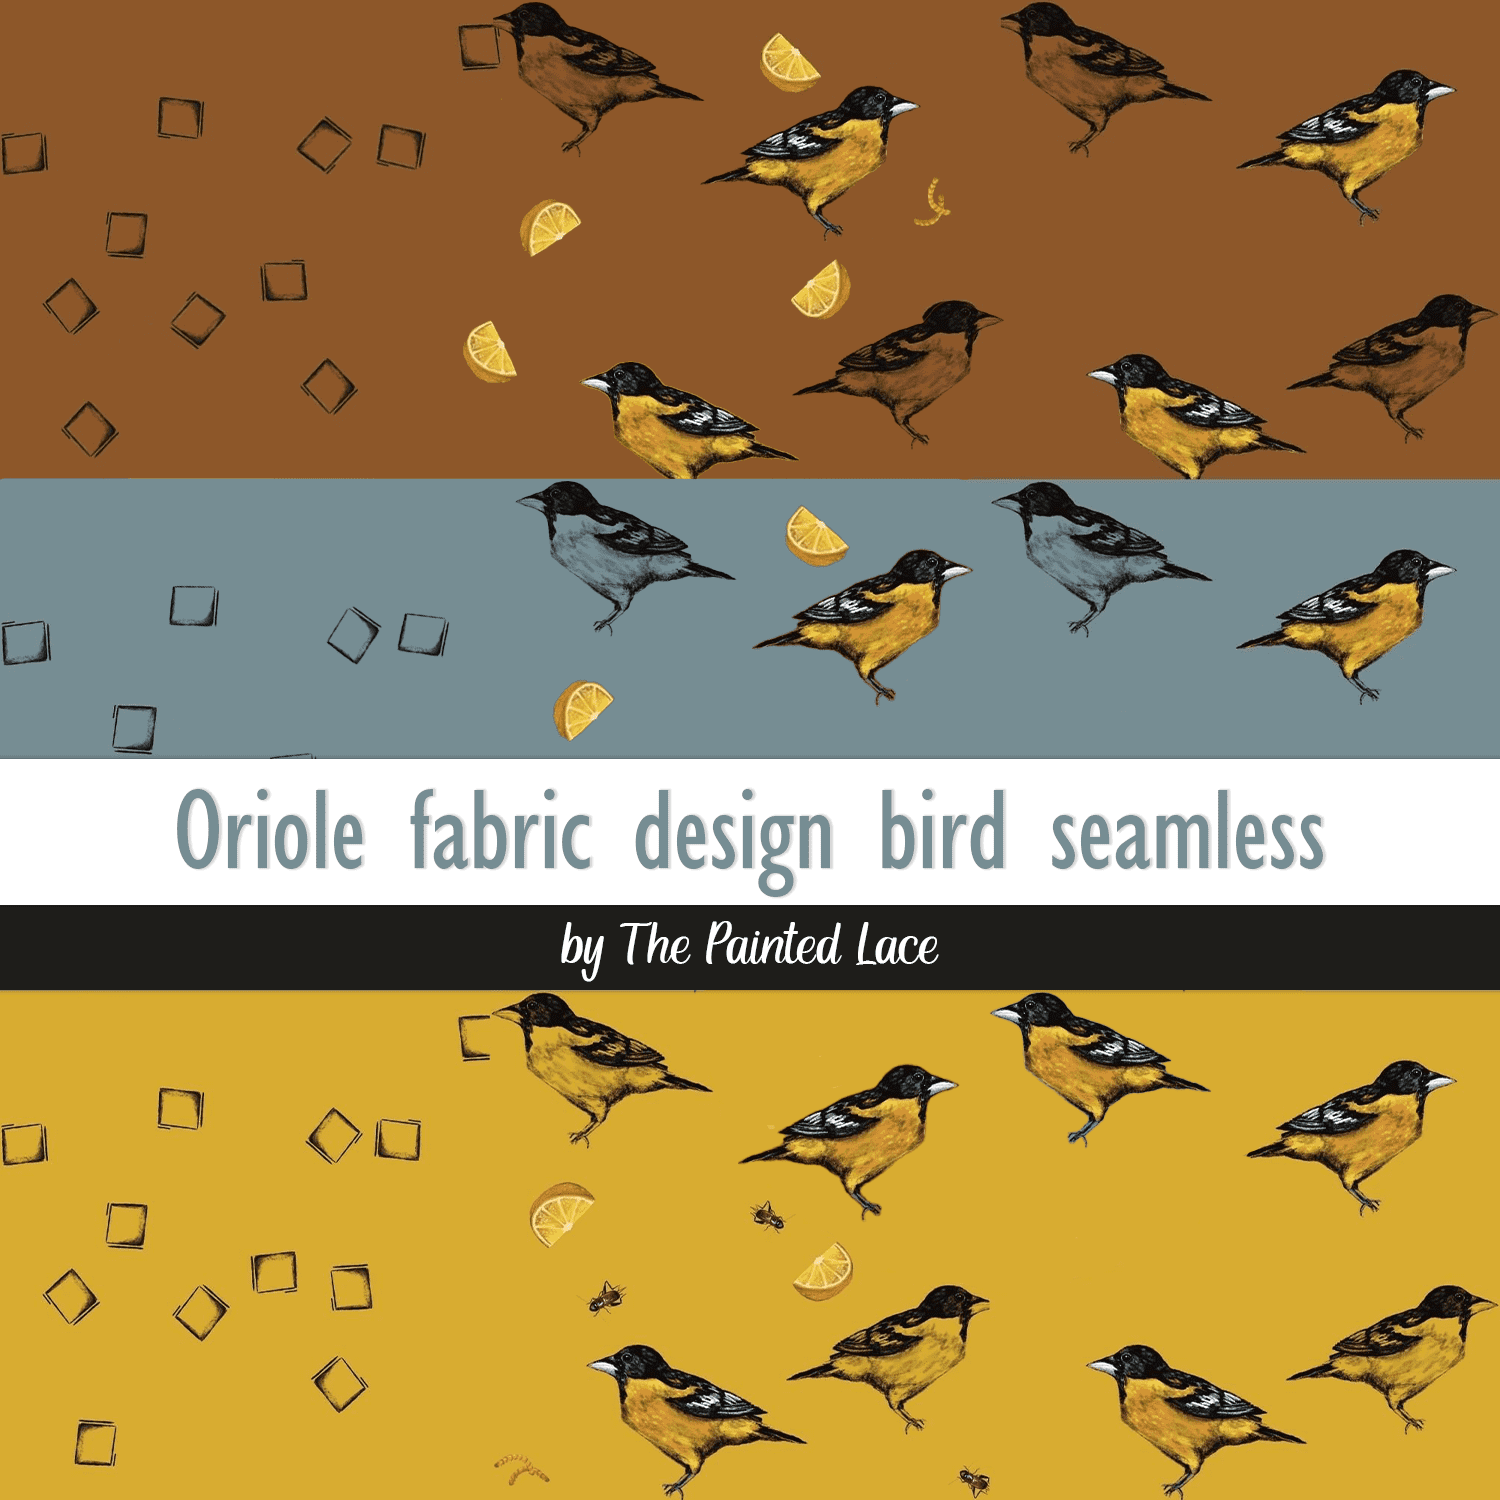 Oriole fabric design bird seamless cover.